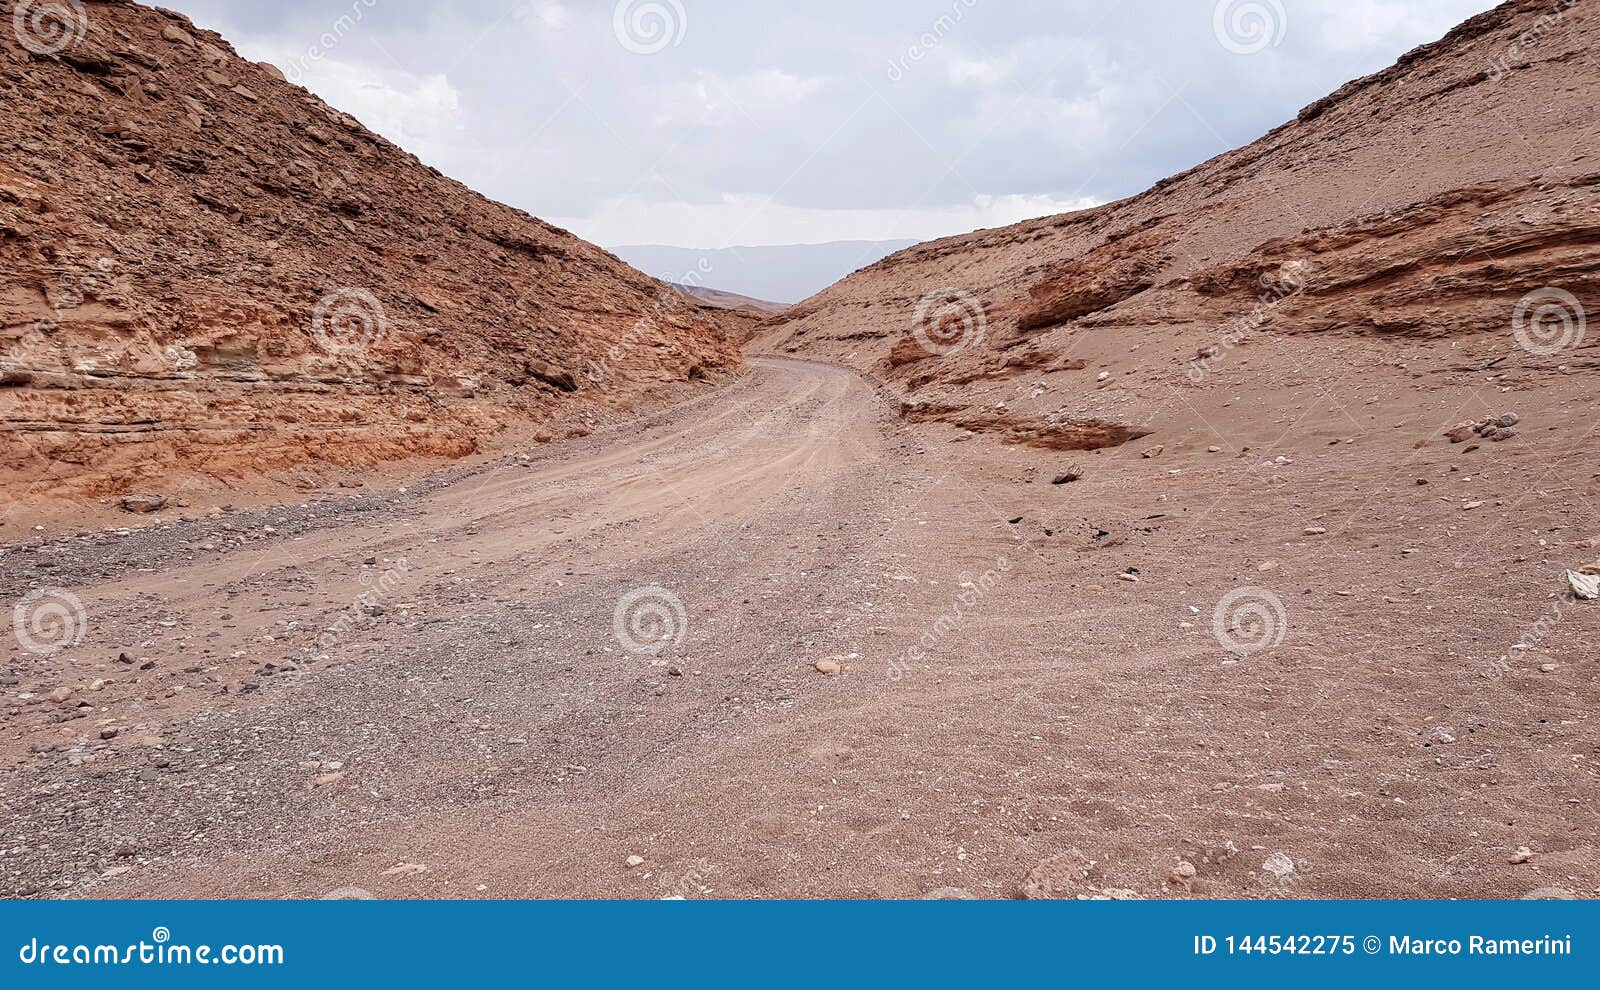 view of the landscape of rocks of the mars valley valle de marte, atacama desert, chile